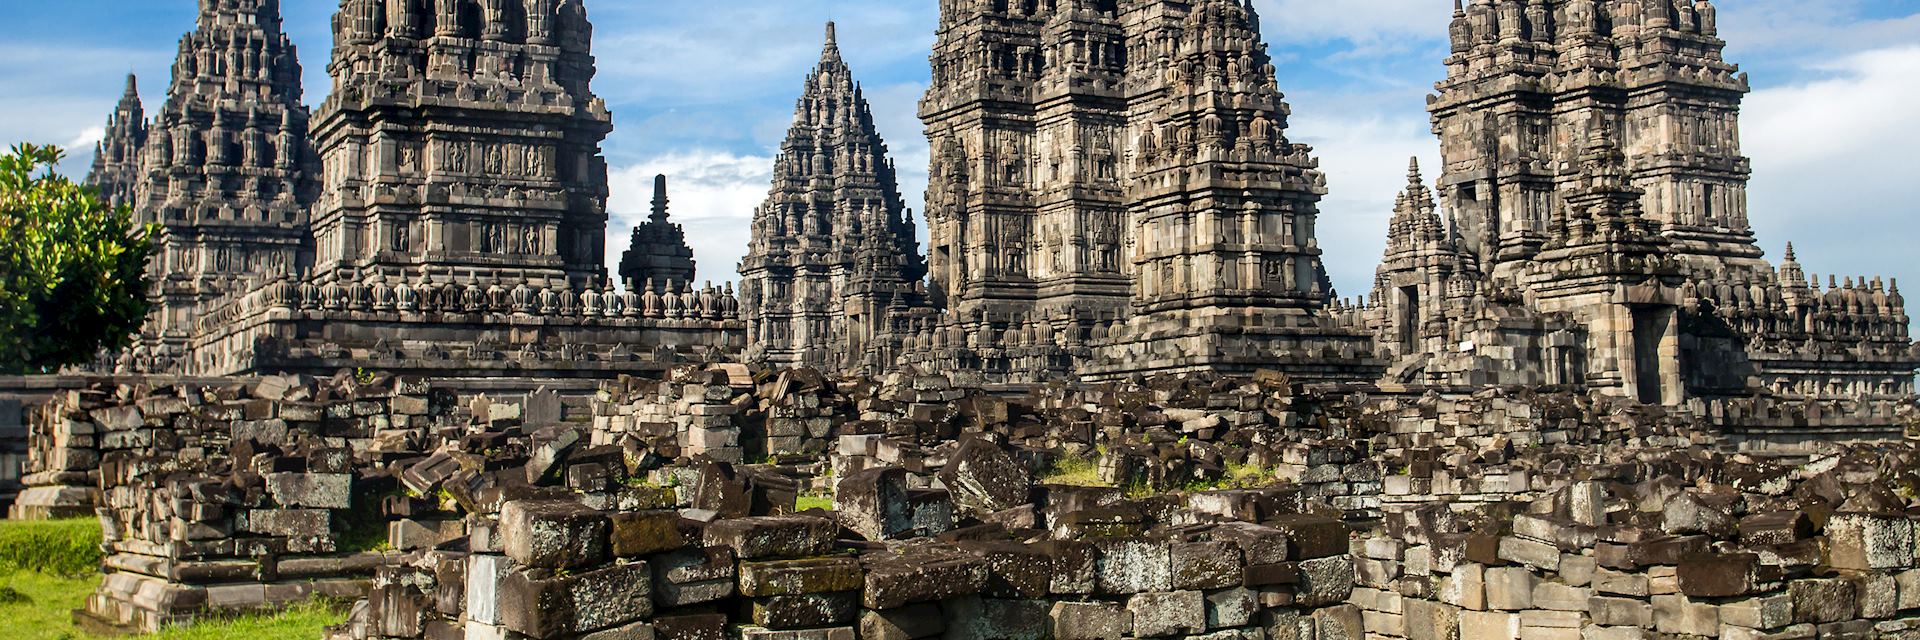 Prambanan Temple near Yogyakarta